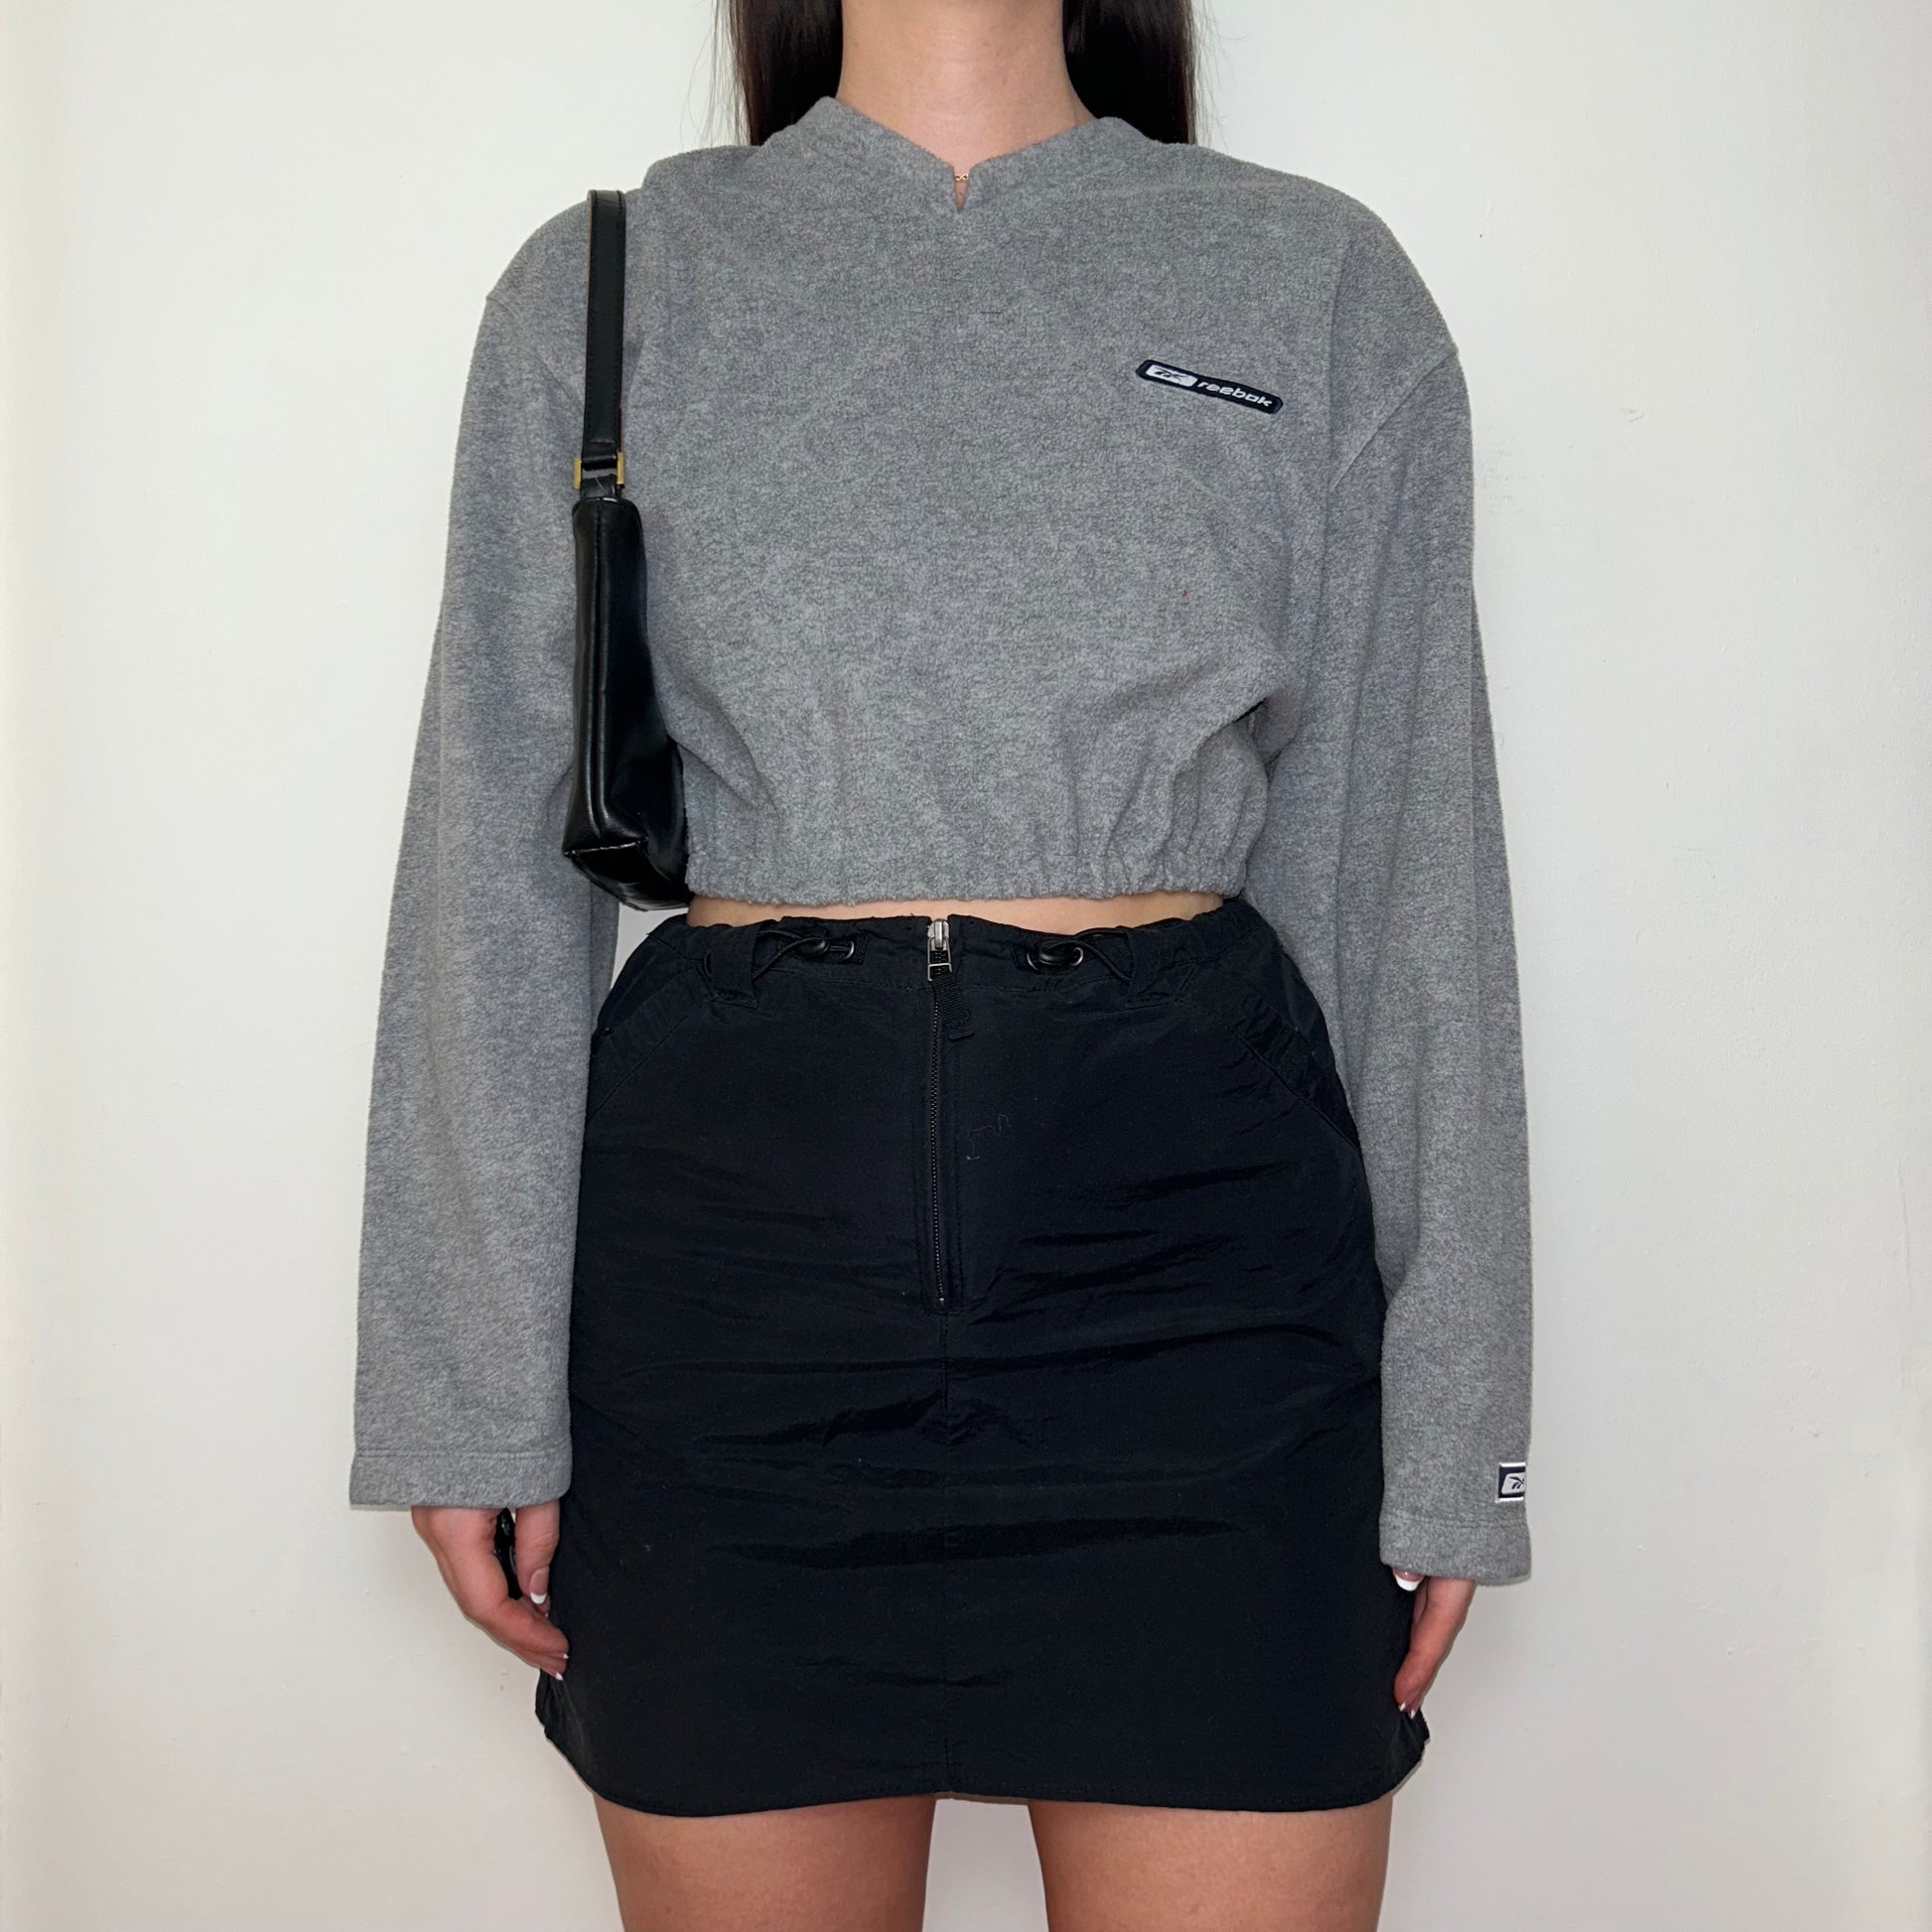 grey cropped sweatshirt with reebok logo shown on a model wearing a black skirt and black shoulder bag